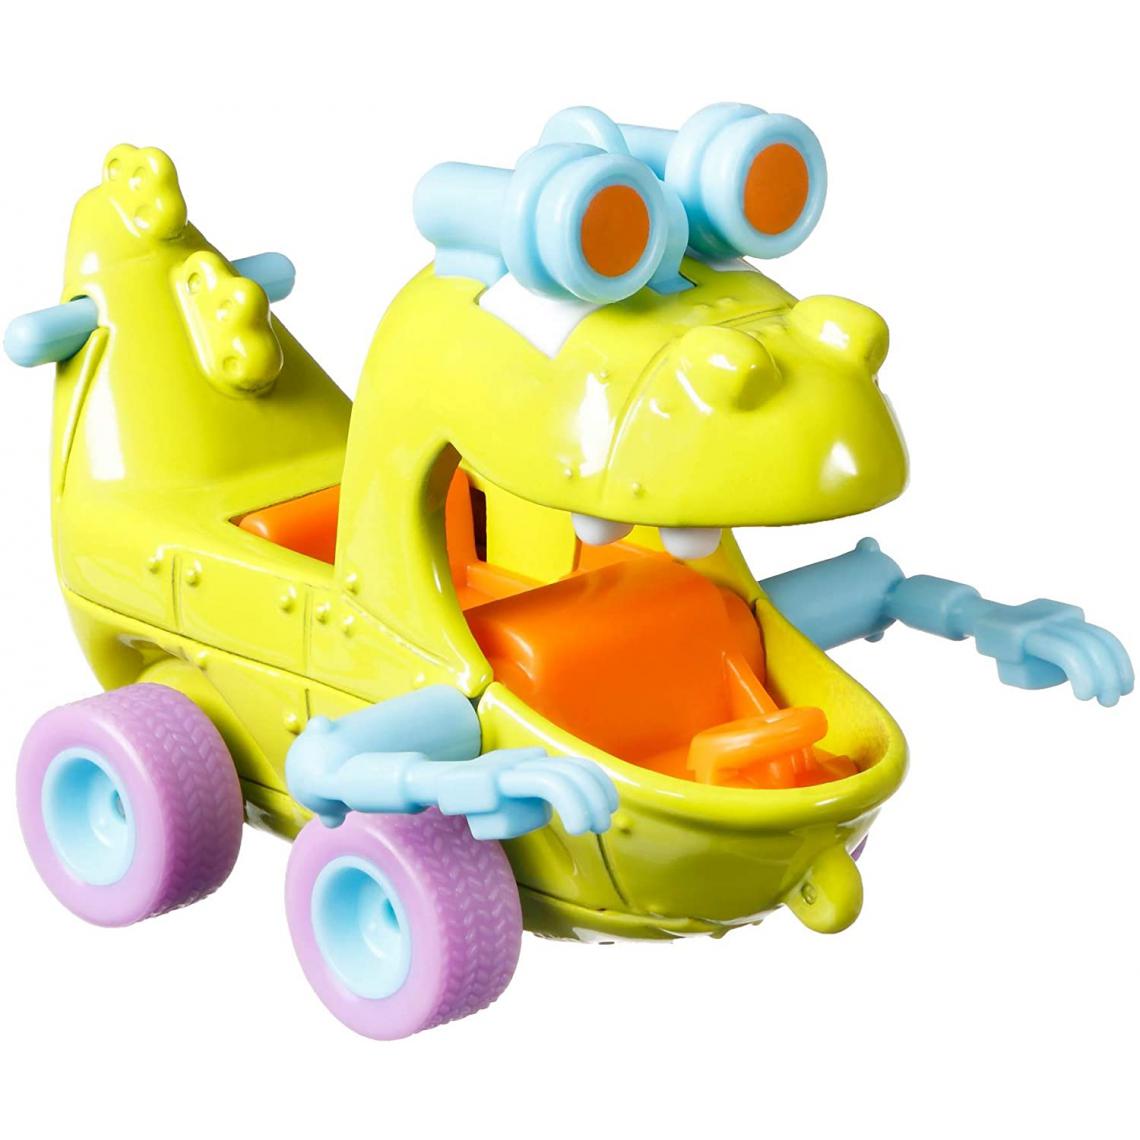 Hot Wheels - Rugrats Reptar Car - Voiture de collection miniature